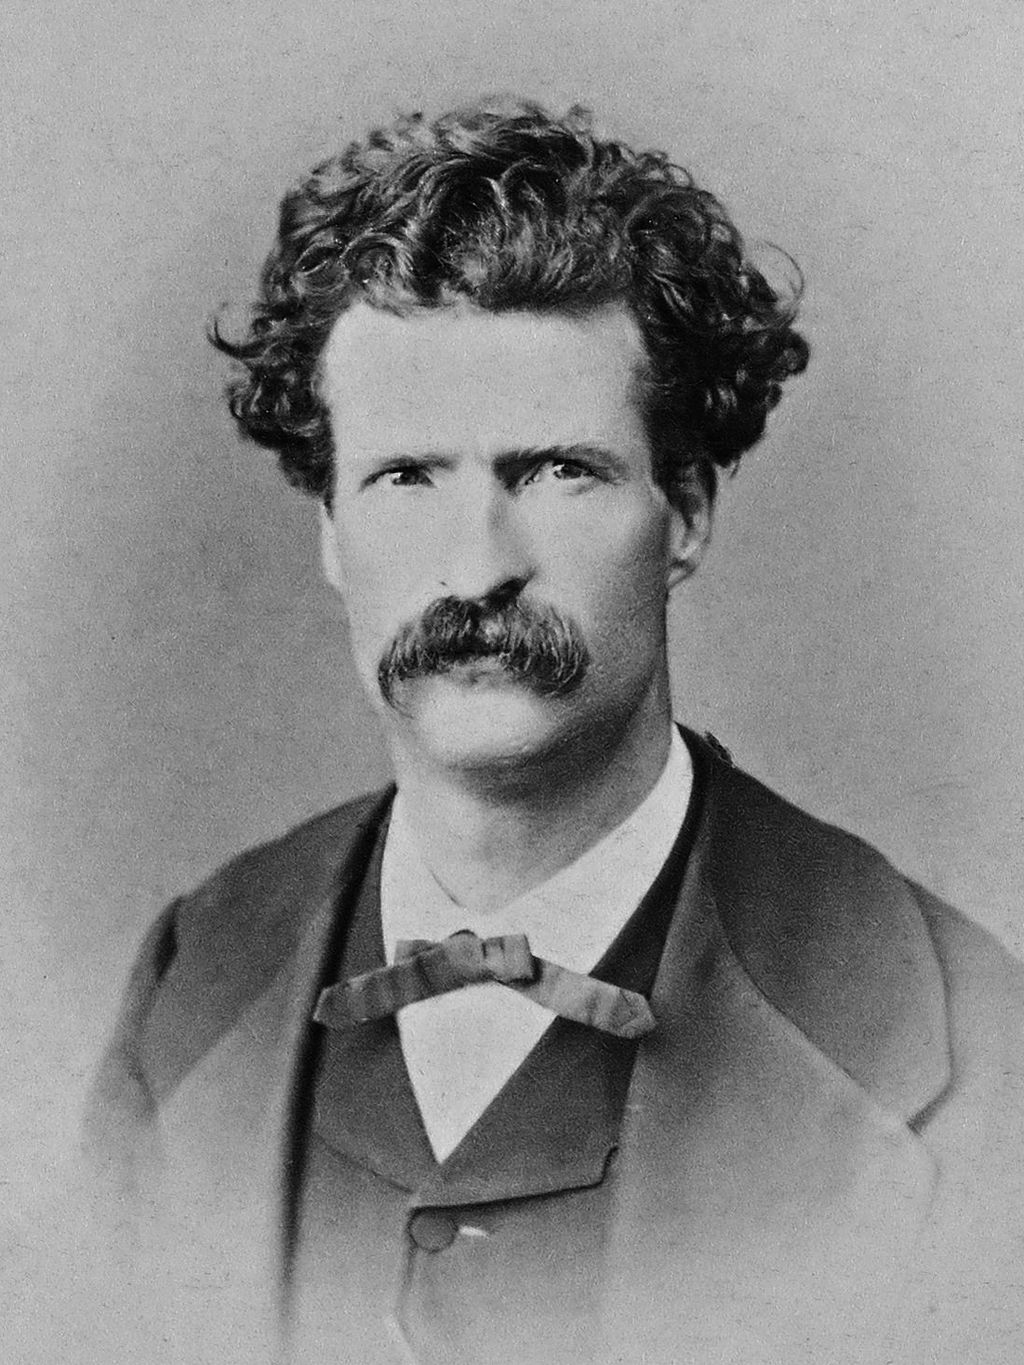 Mark Twain One-Liners